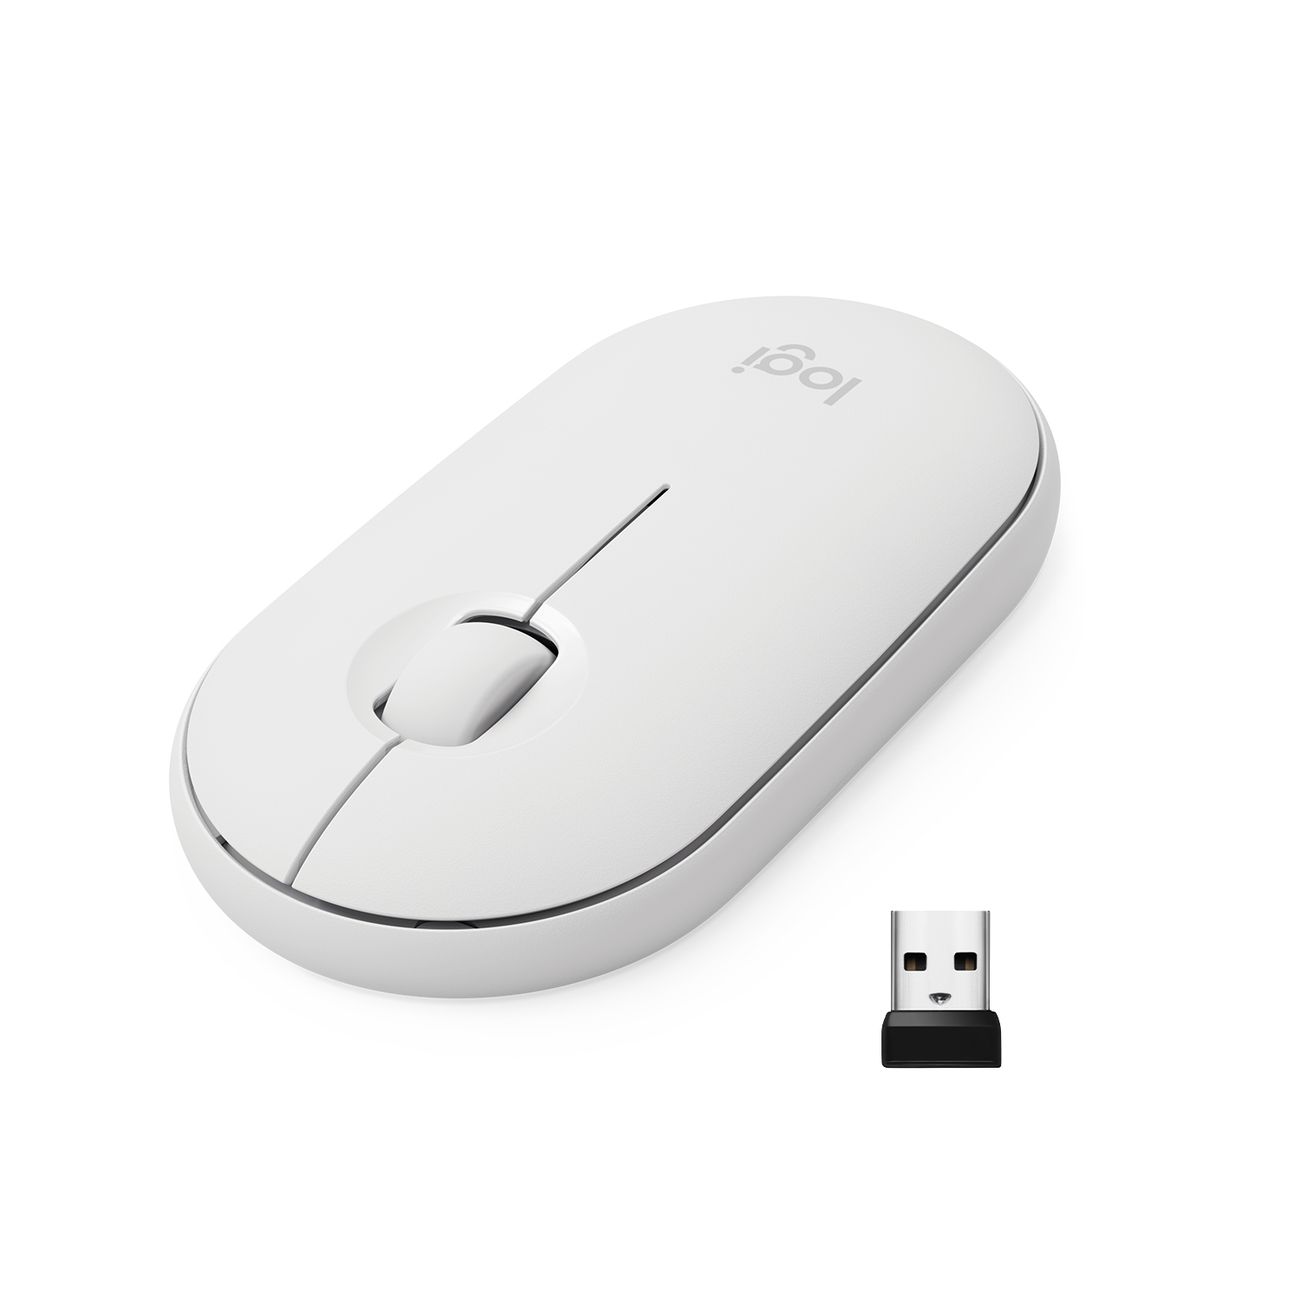 Мышь беспроводная Logitech M350 Pebble Mouse, white (910-005716) ракель cclez0162fc31 для sharp ar m350 m450 cet cet4553